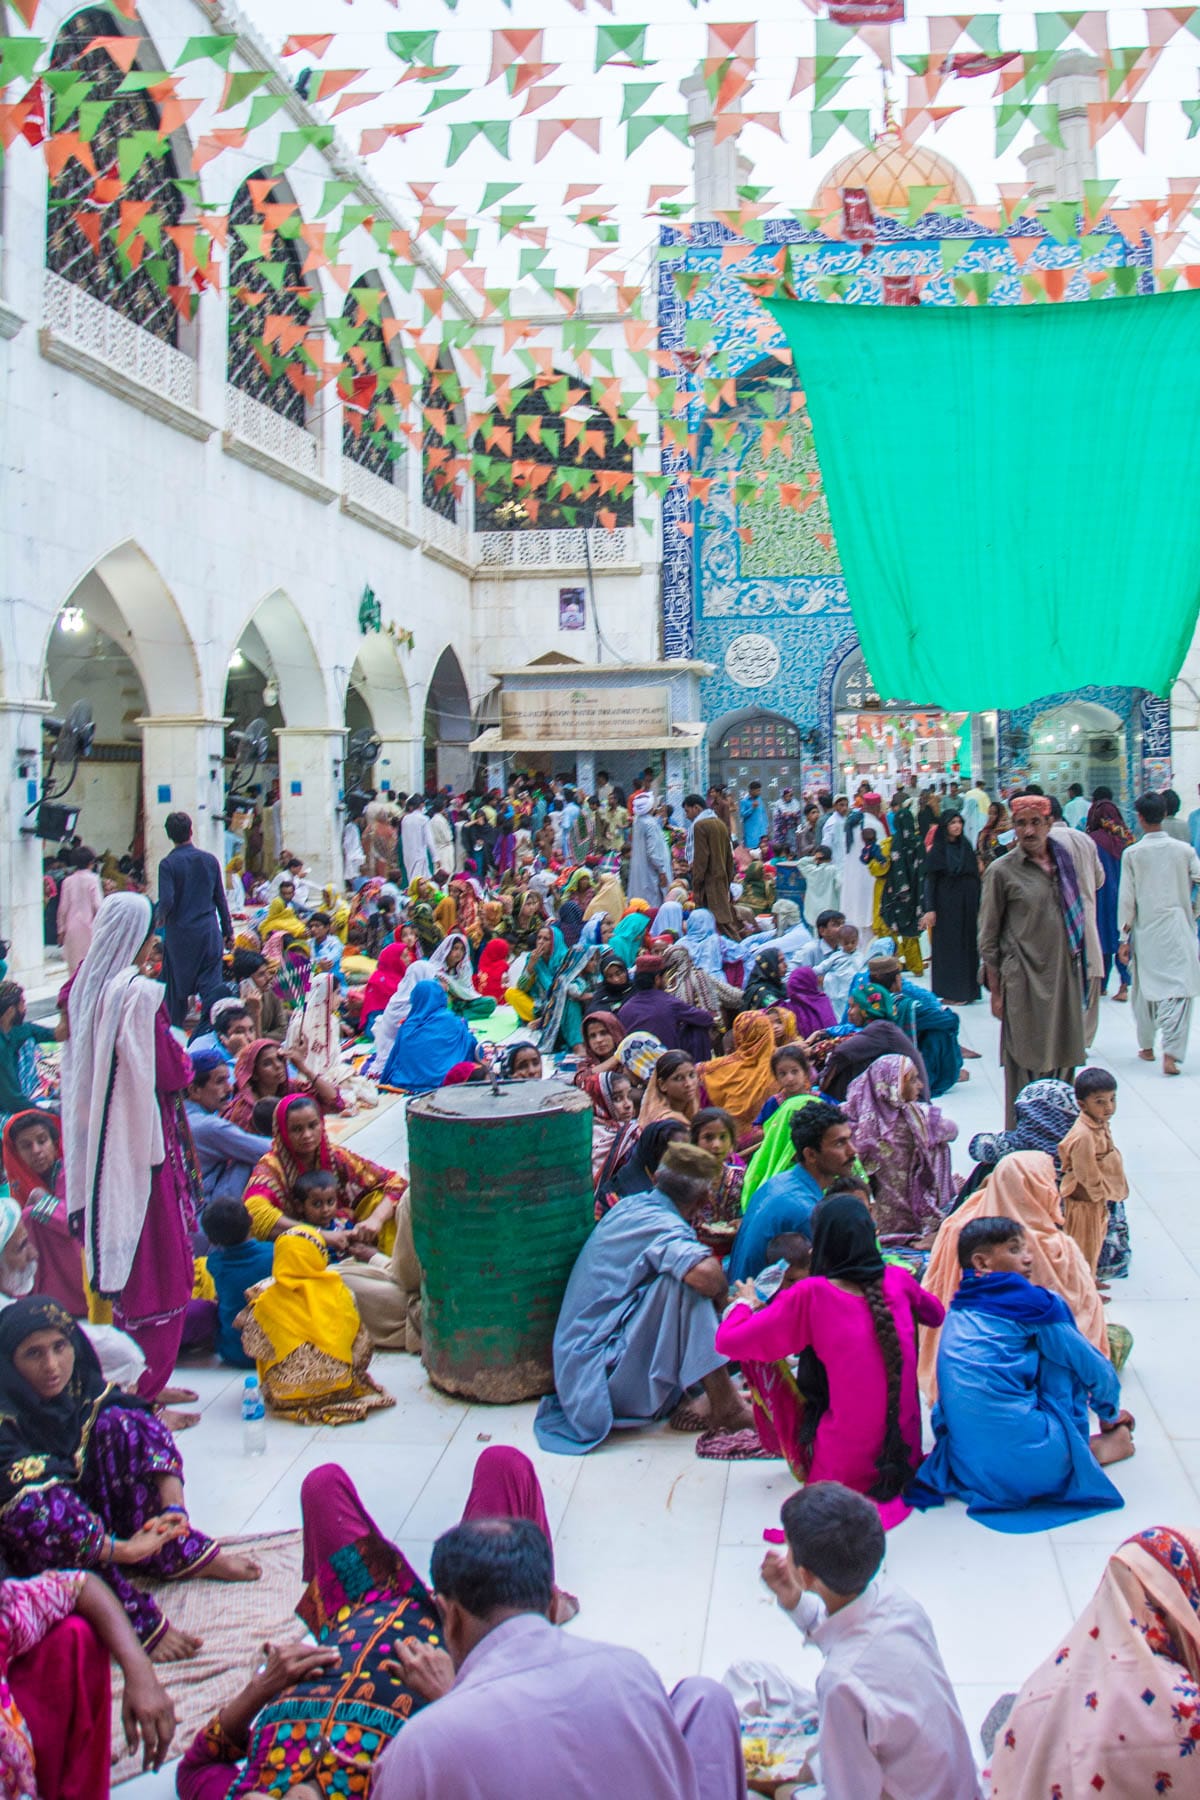 People gathering for iftar during Ramadan at the Lal Shahbaz Qalandar shrine in Sehwan, Pakistan